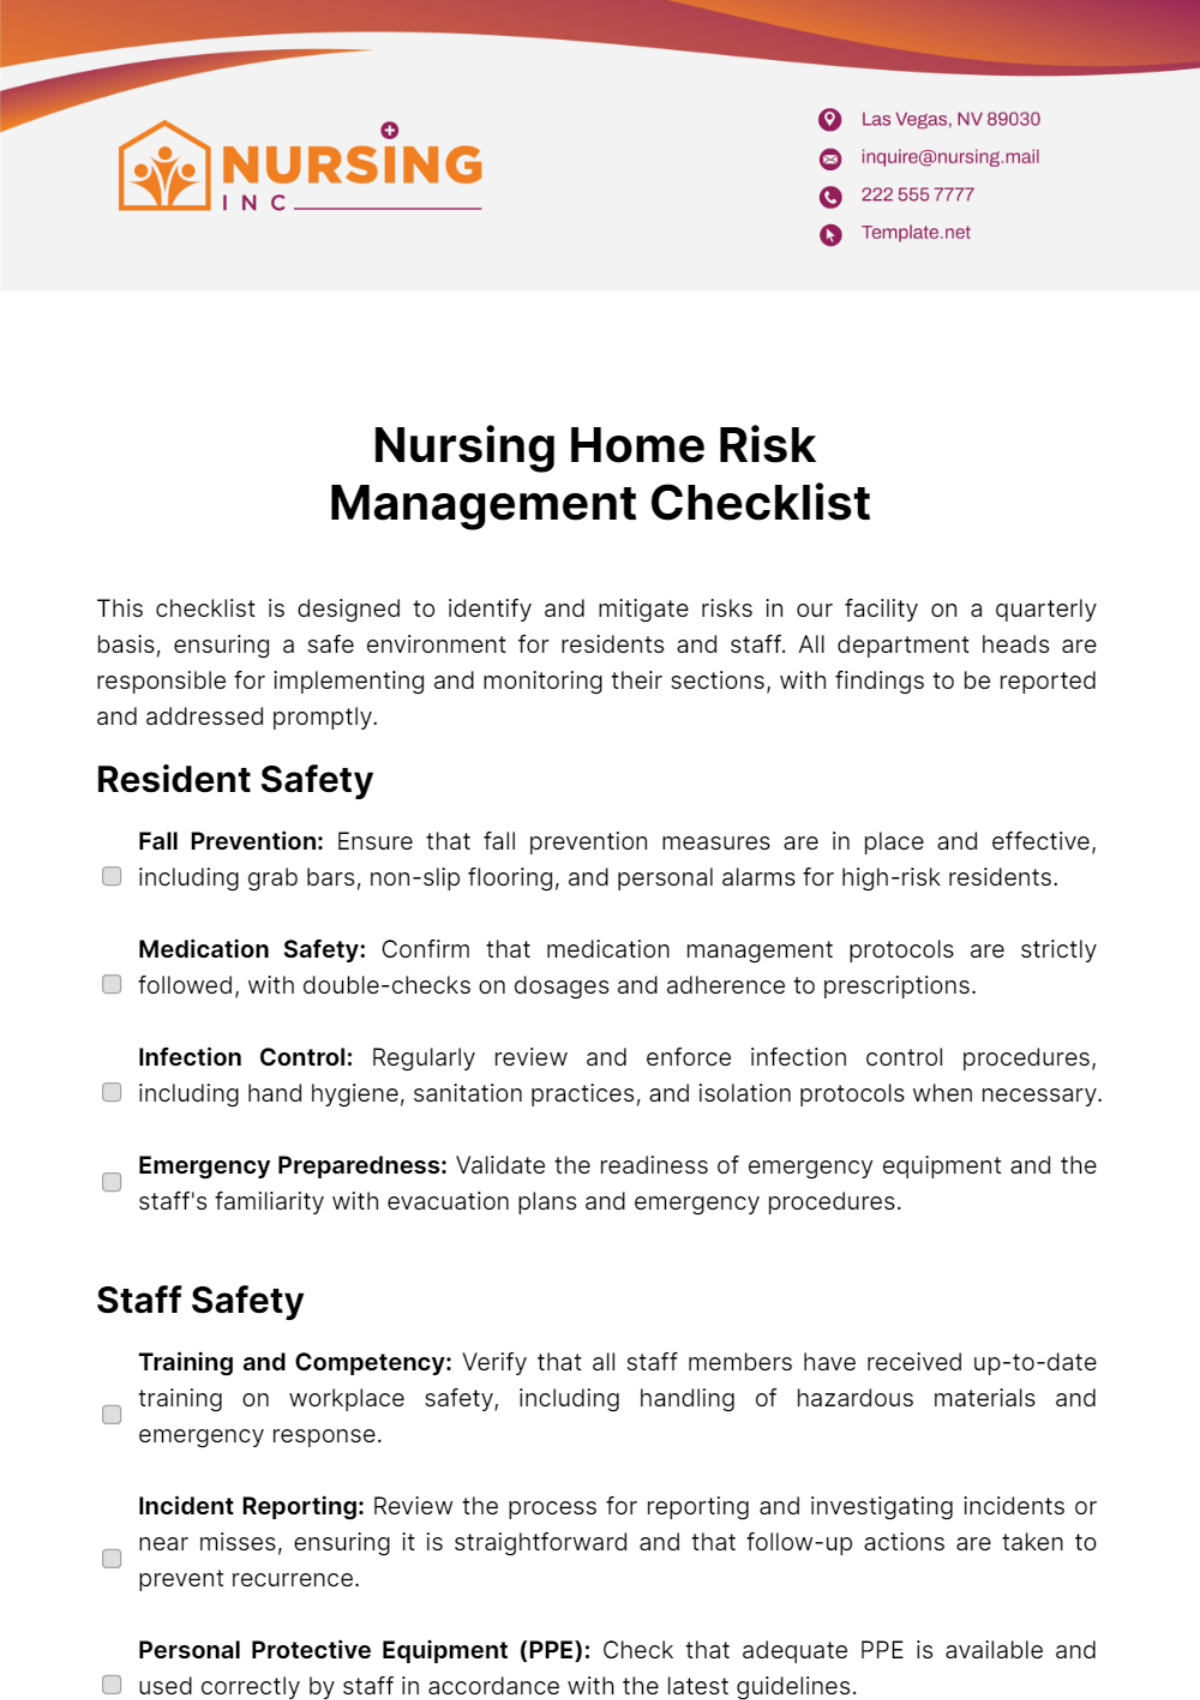 Nursing Home Risk Management Checklist Template